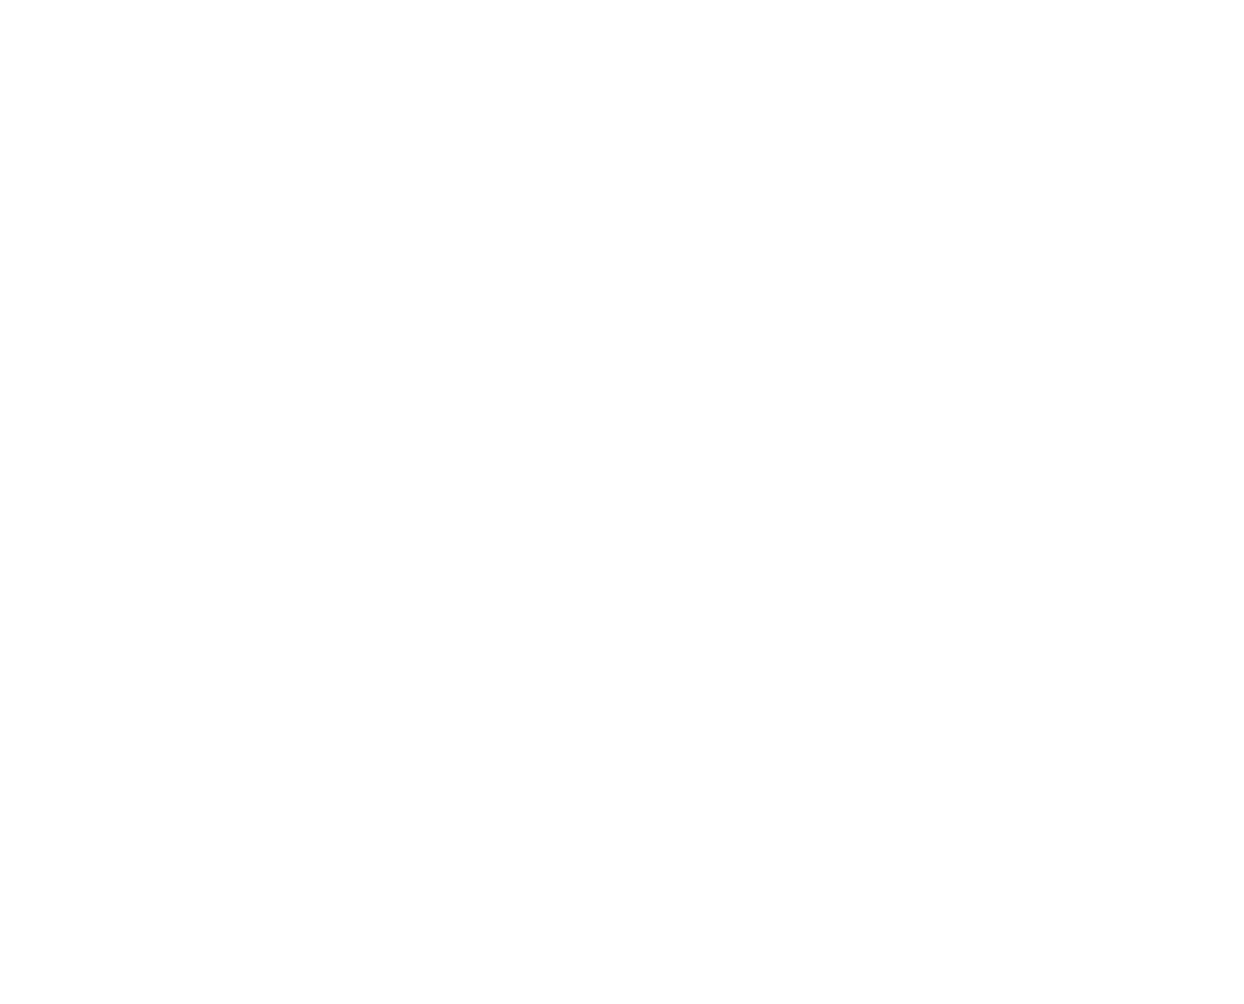 TGP Ventures